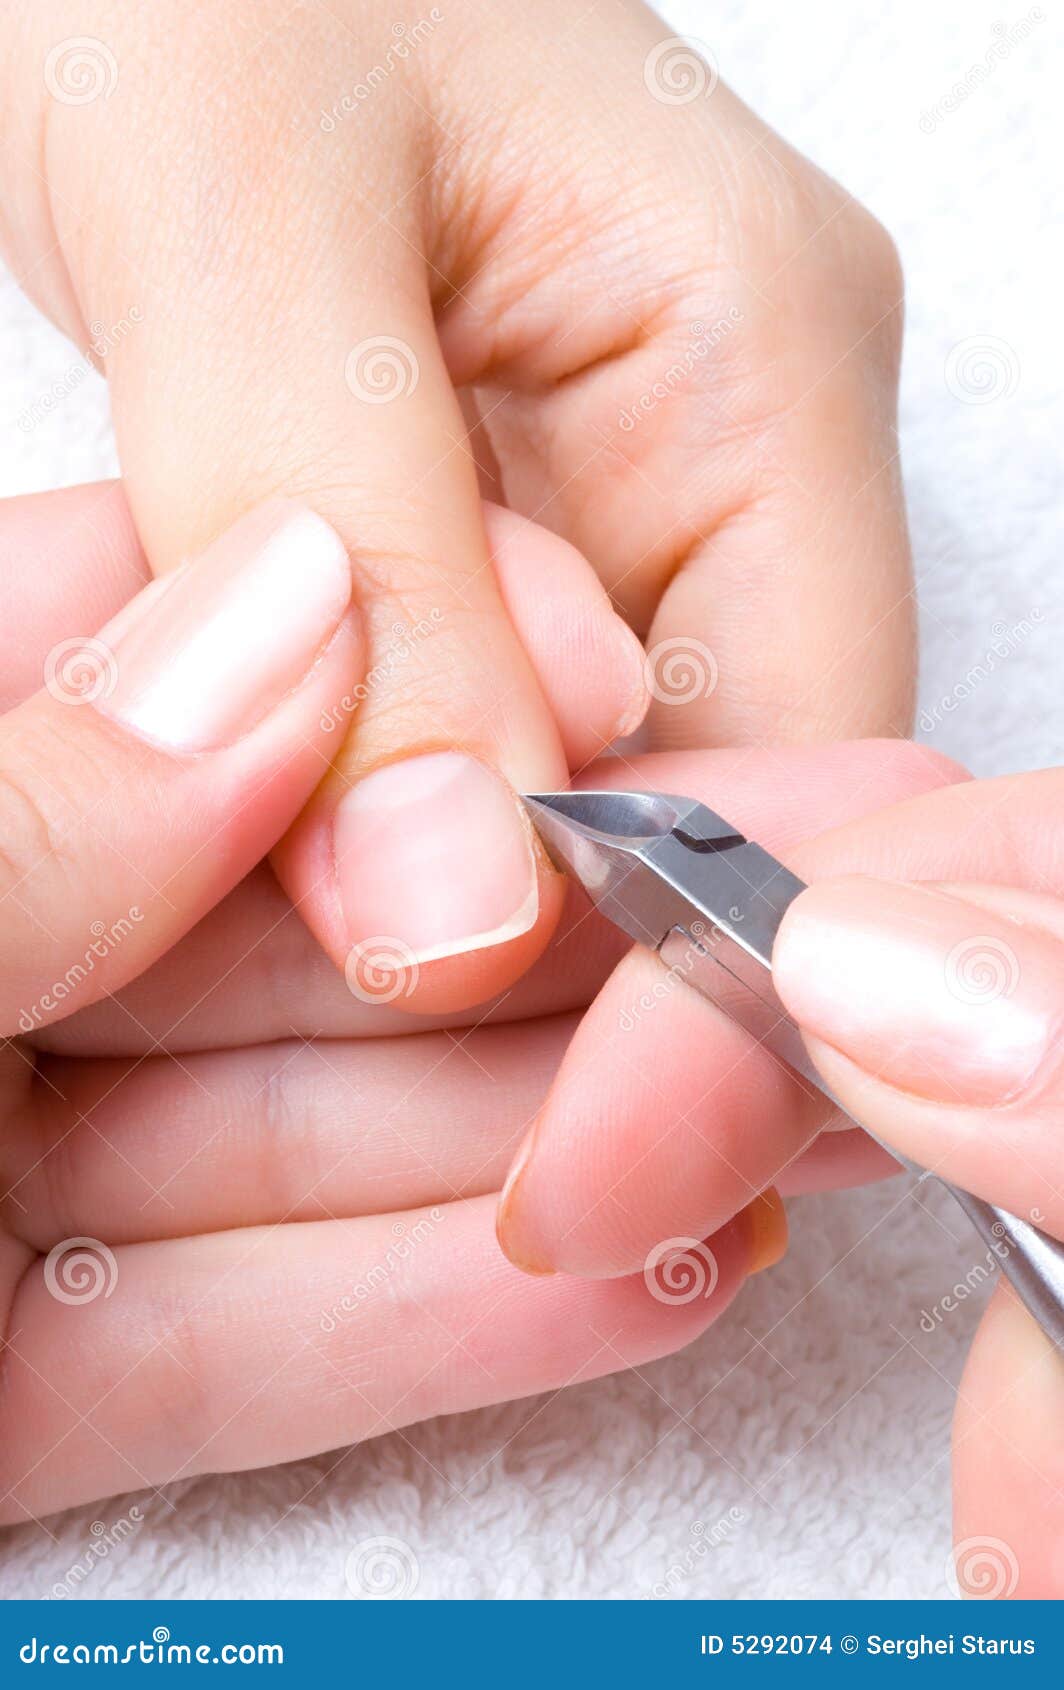 nail salon, cuticle cut